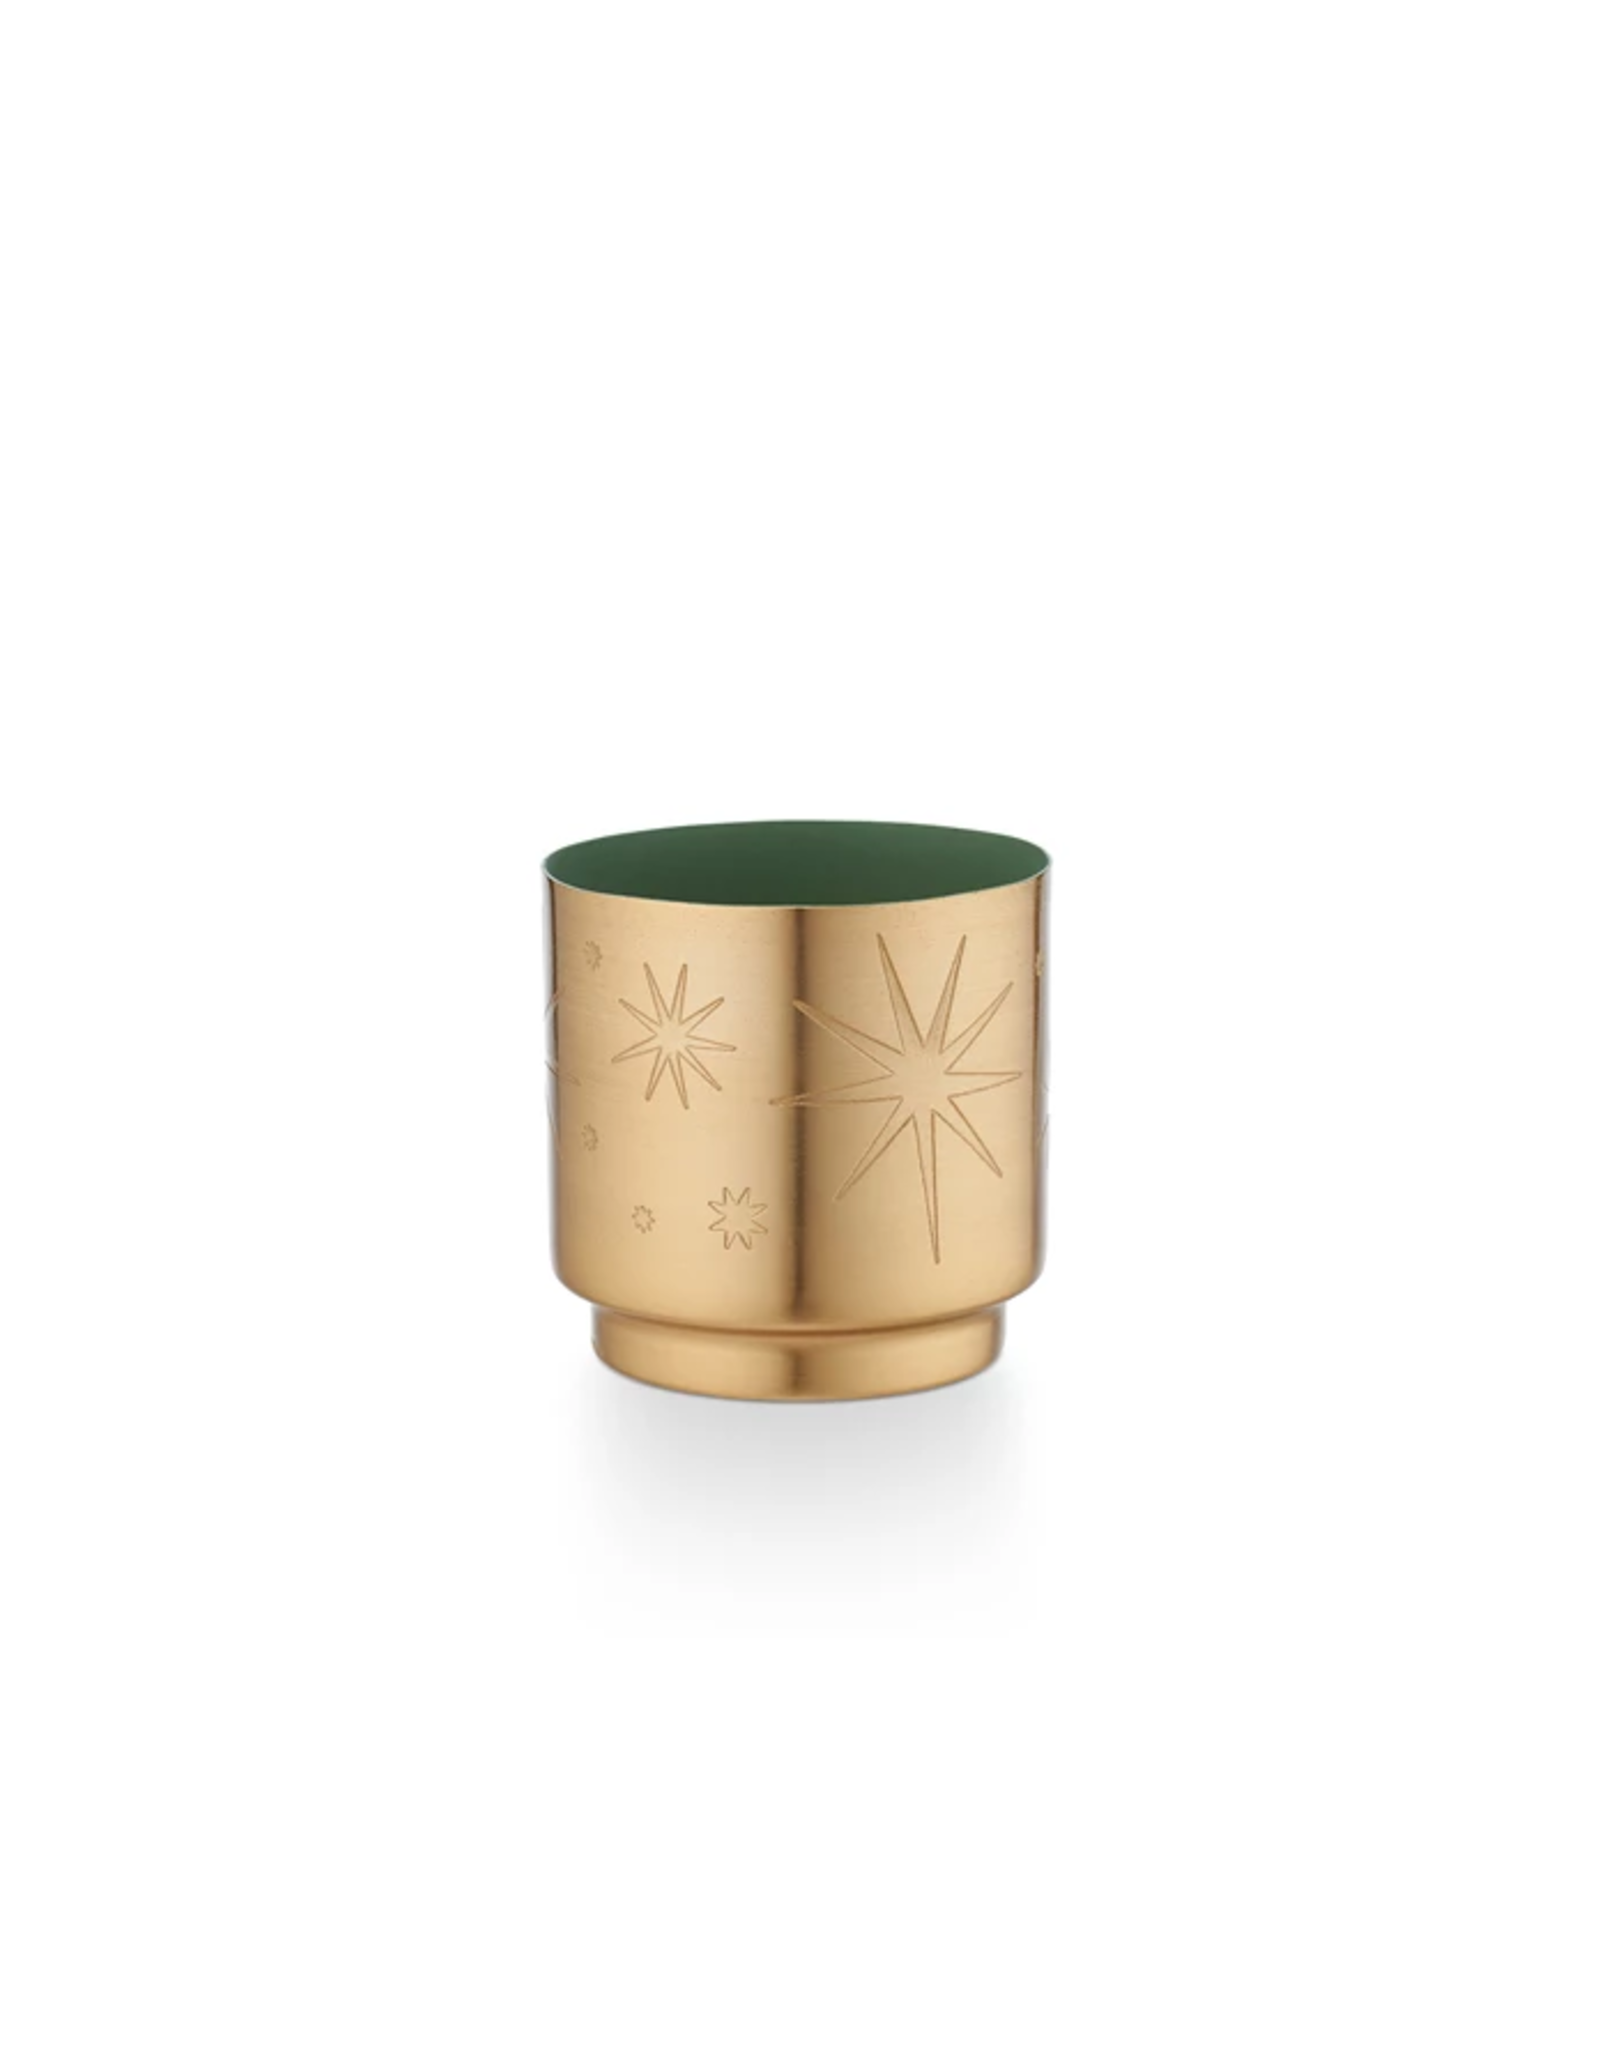 Illume Balsam & Cedar Tiny Tinsel Candle